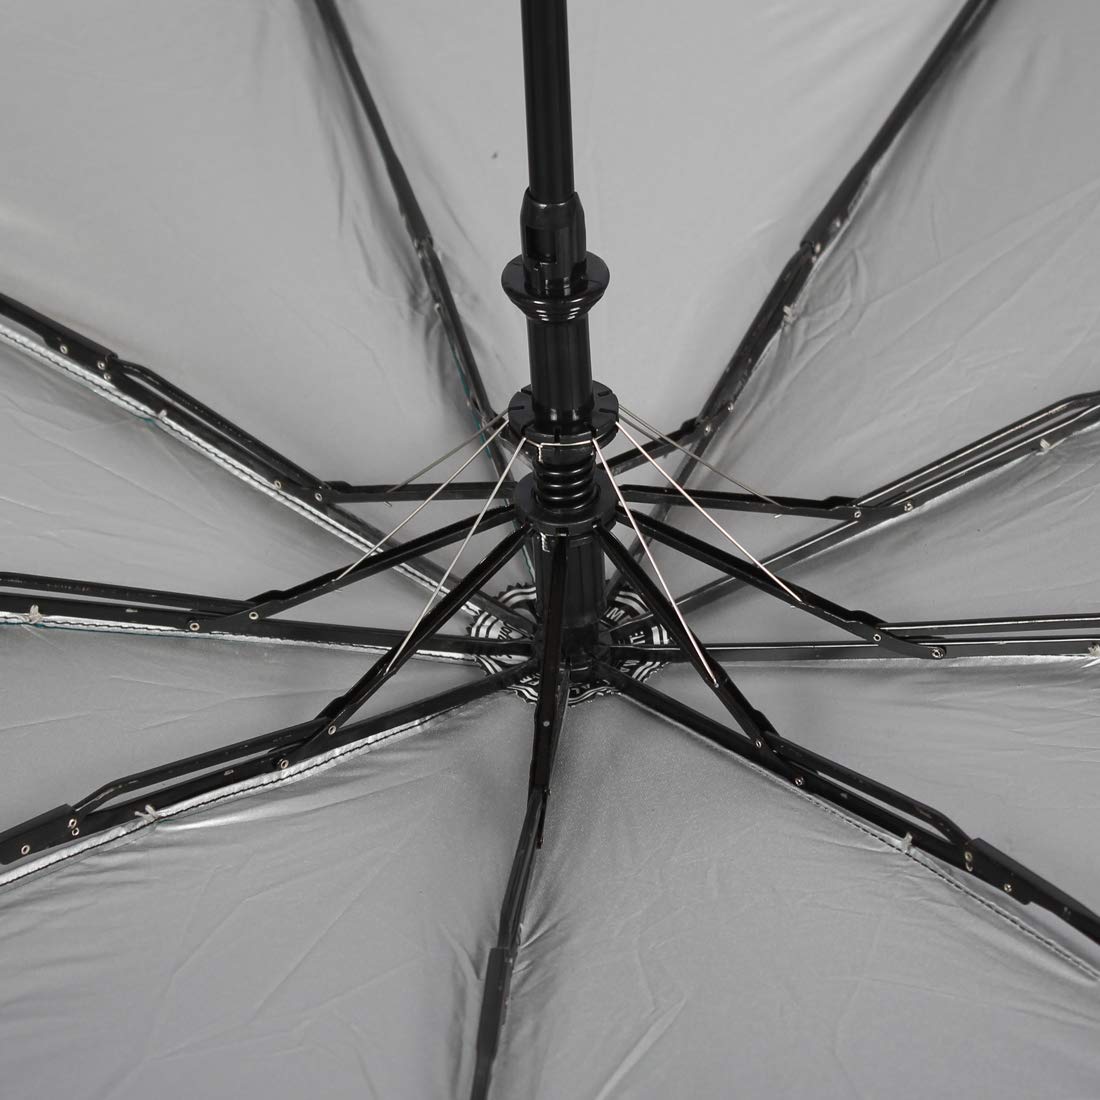 0234 -3 Fold Premium Umbrella - SkyShopy